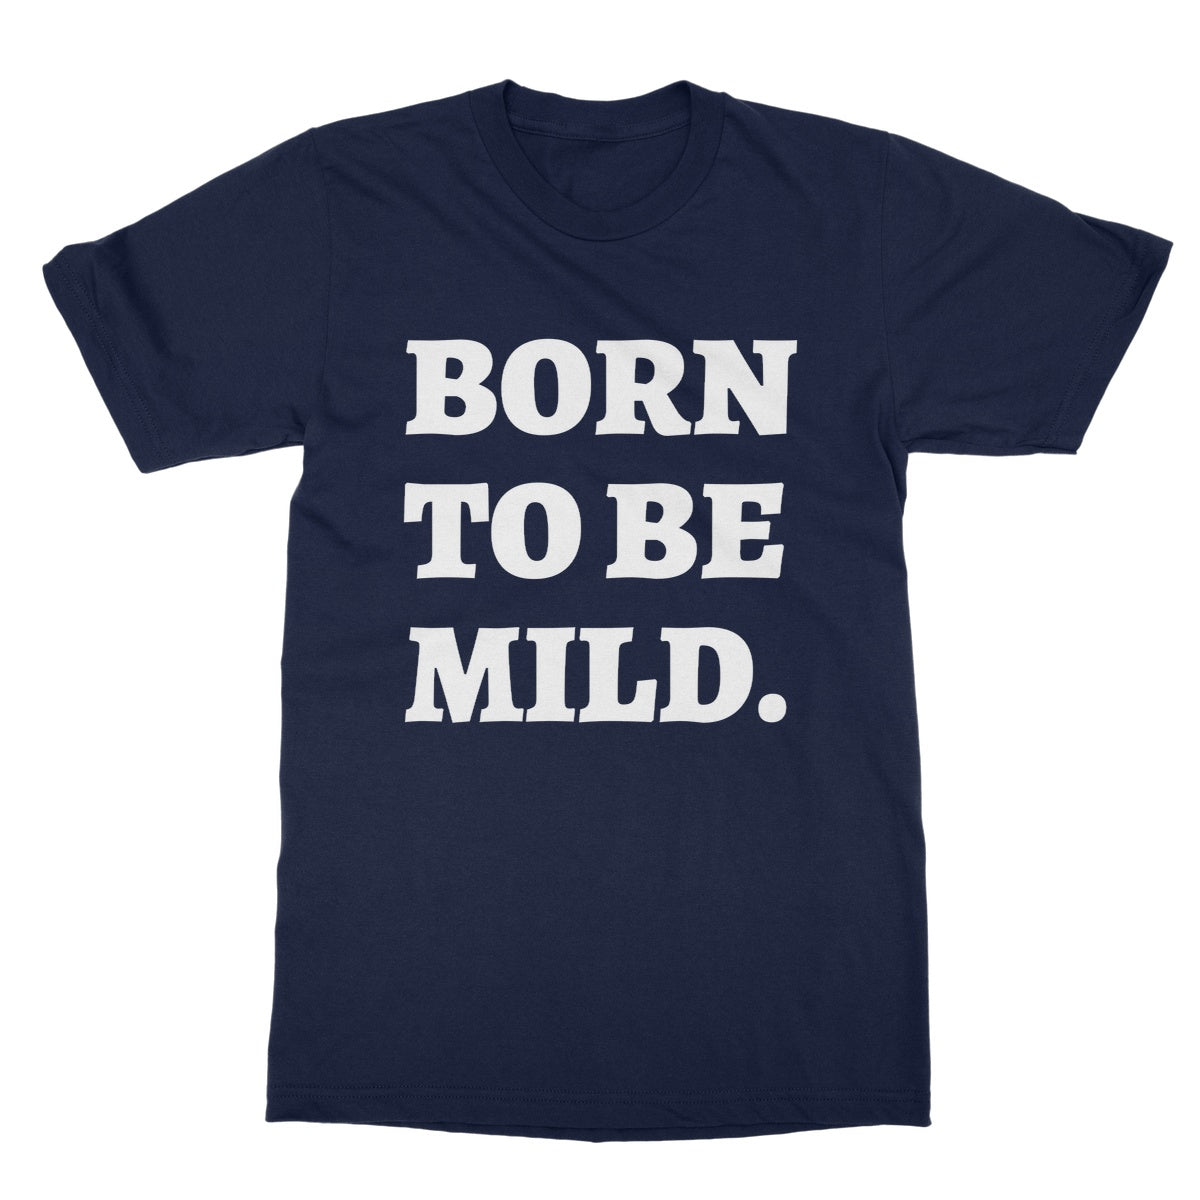 born to be mild t shirt navy